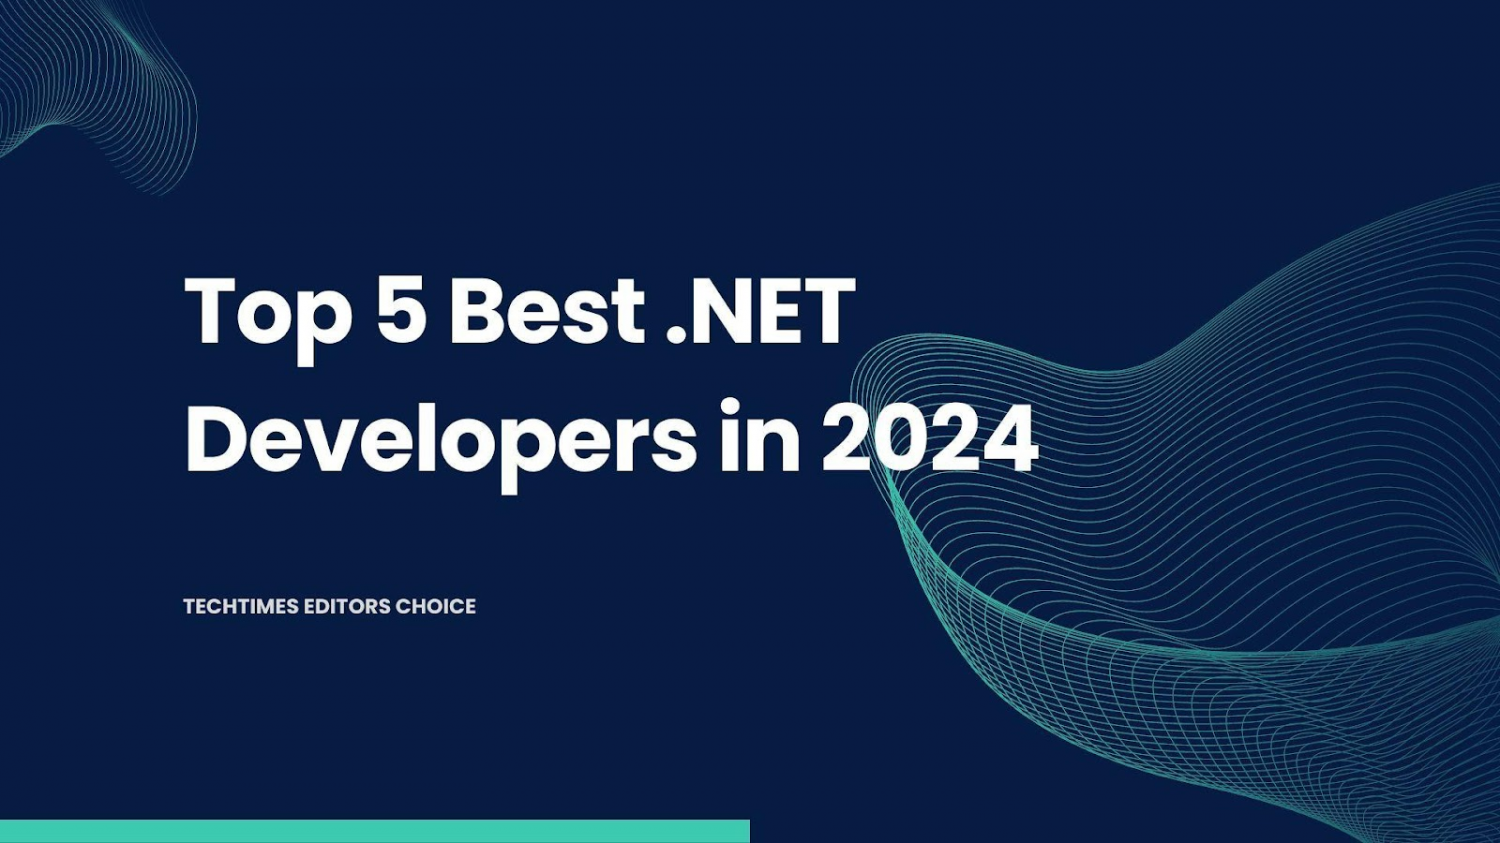 Top 5 Best .NET Developers in 2024